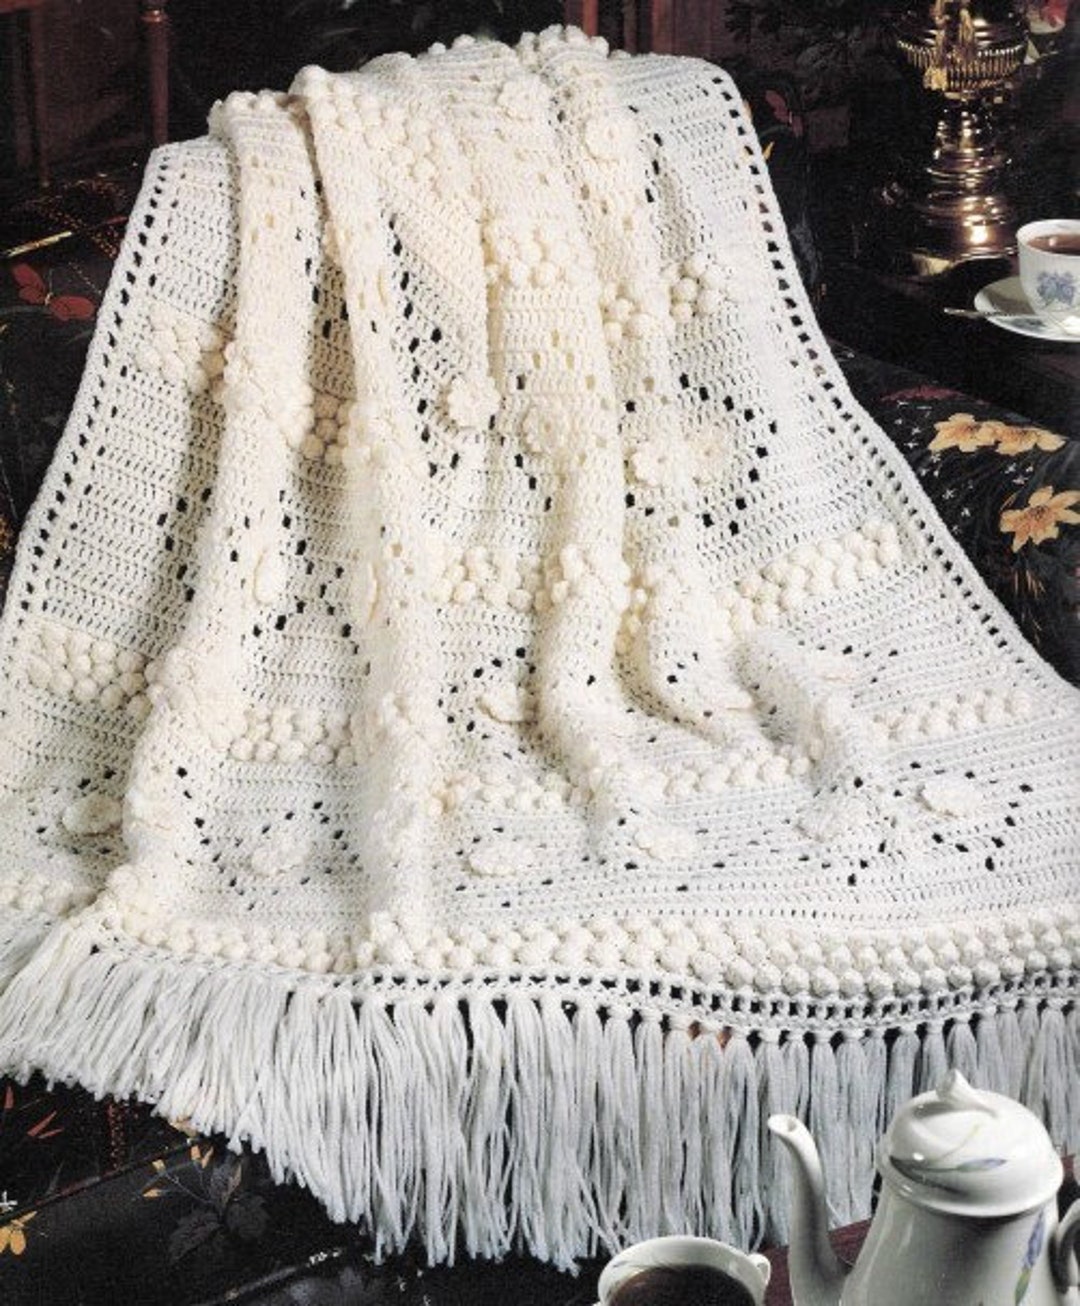 The Lacey Linda Lanyard Free Crochet Pattern